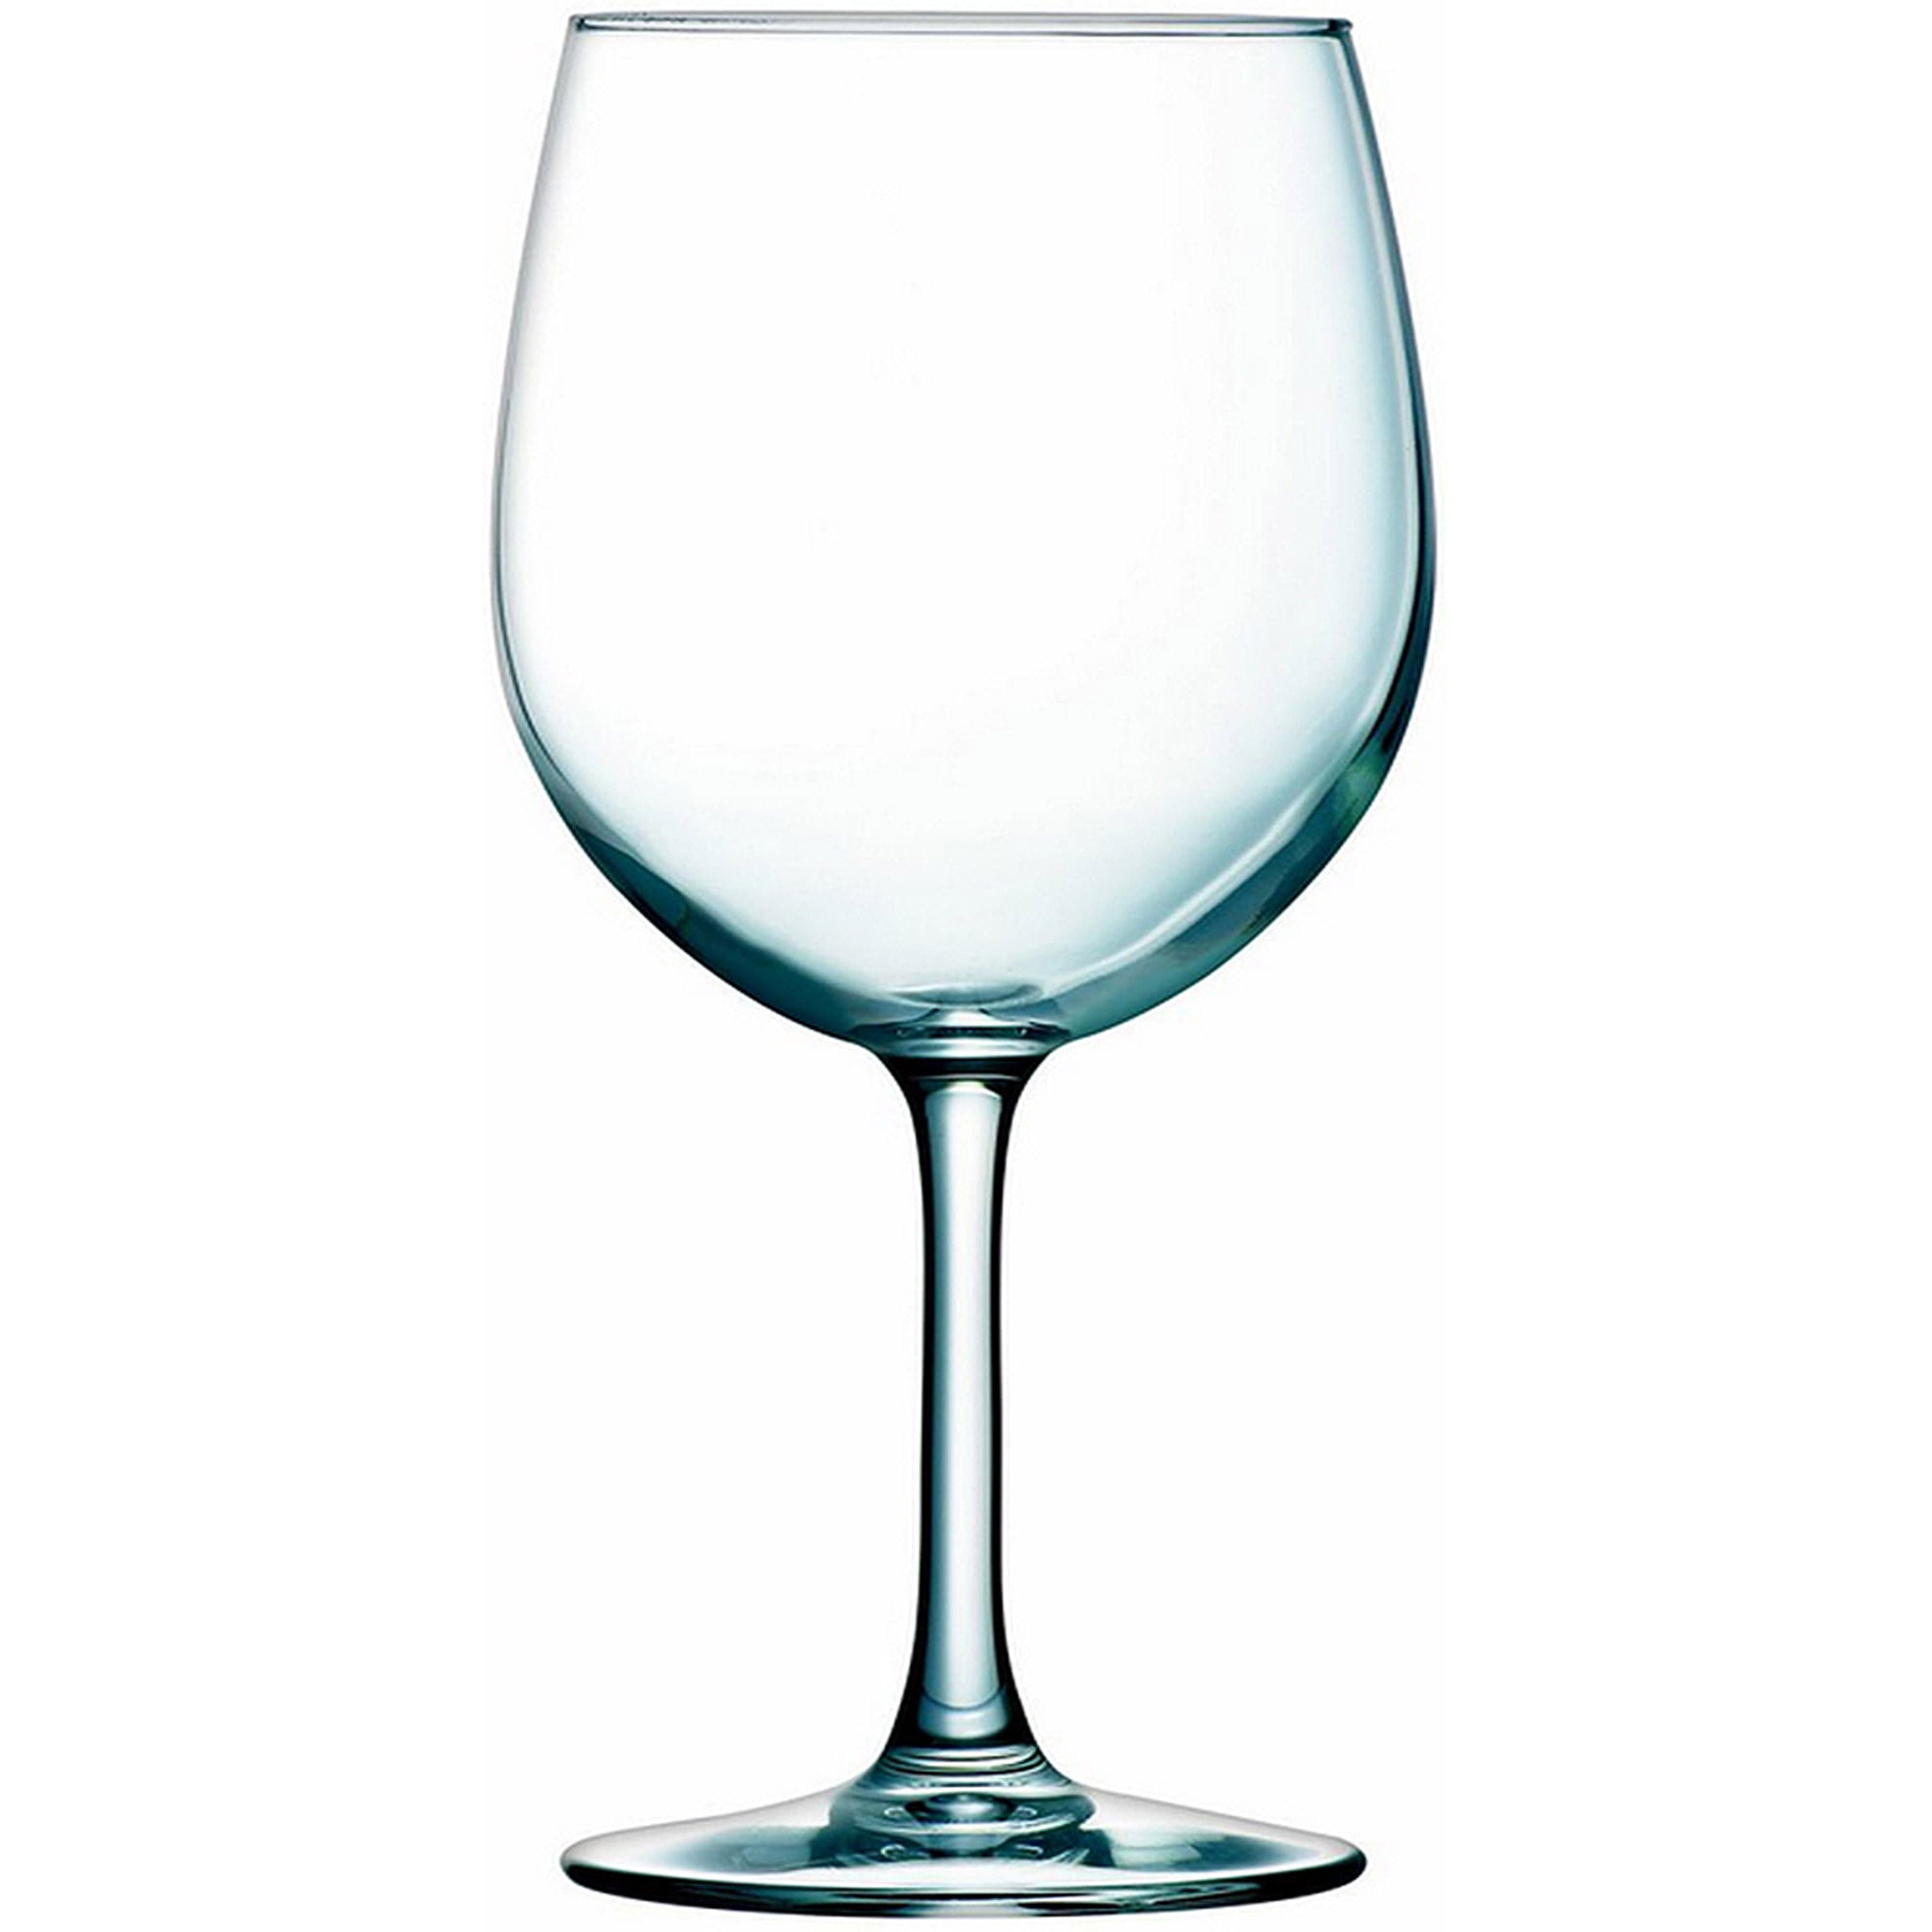 Mainstays 12 oz. Alto Stemmed Wine Glass, 1 Count